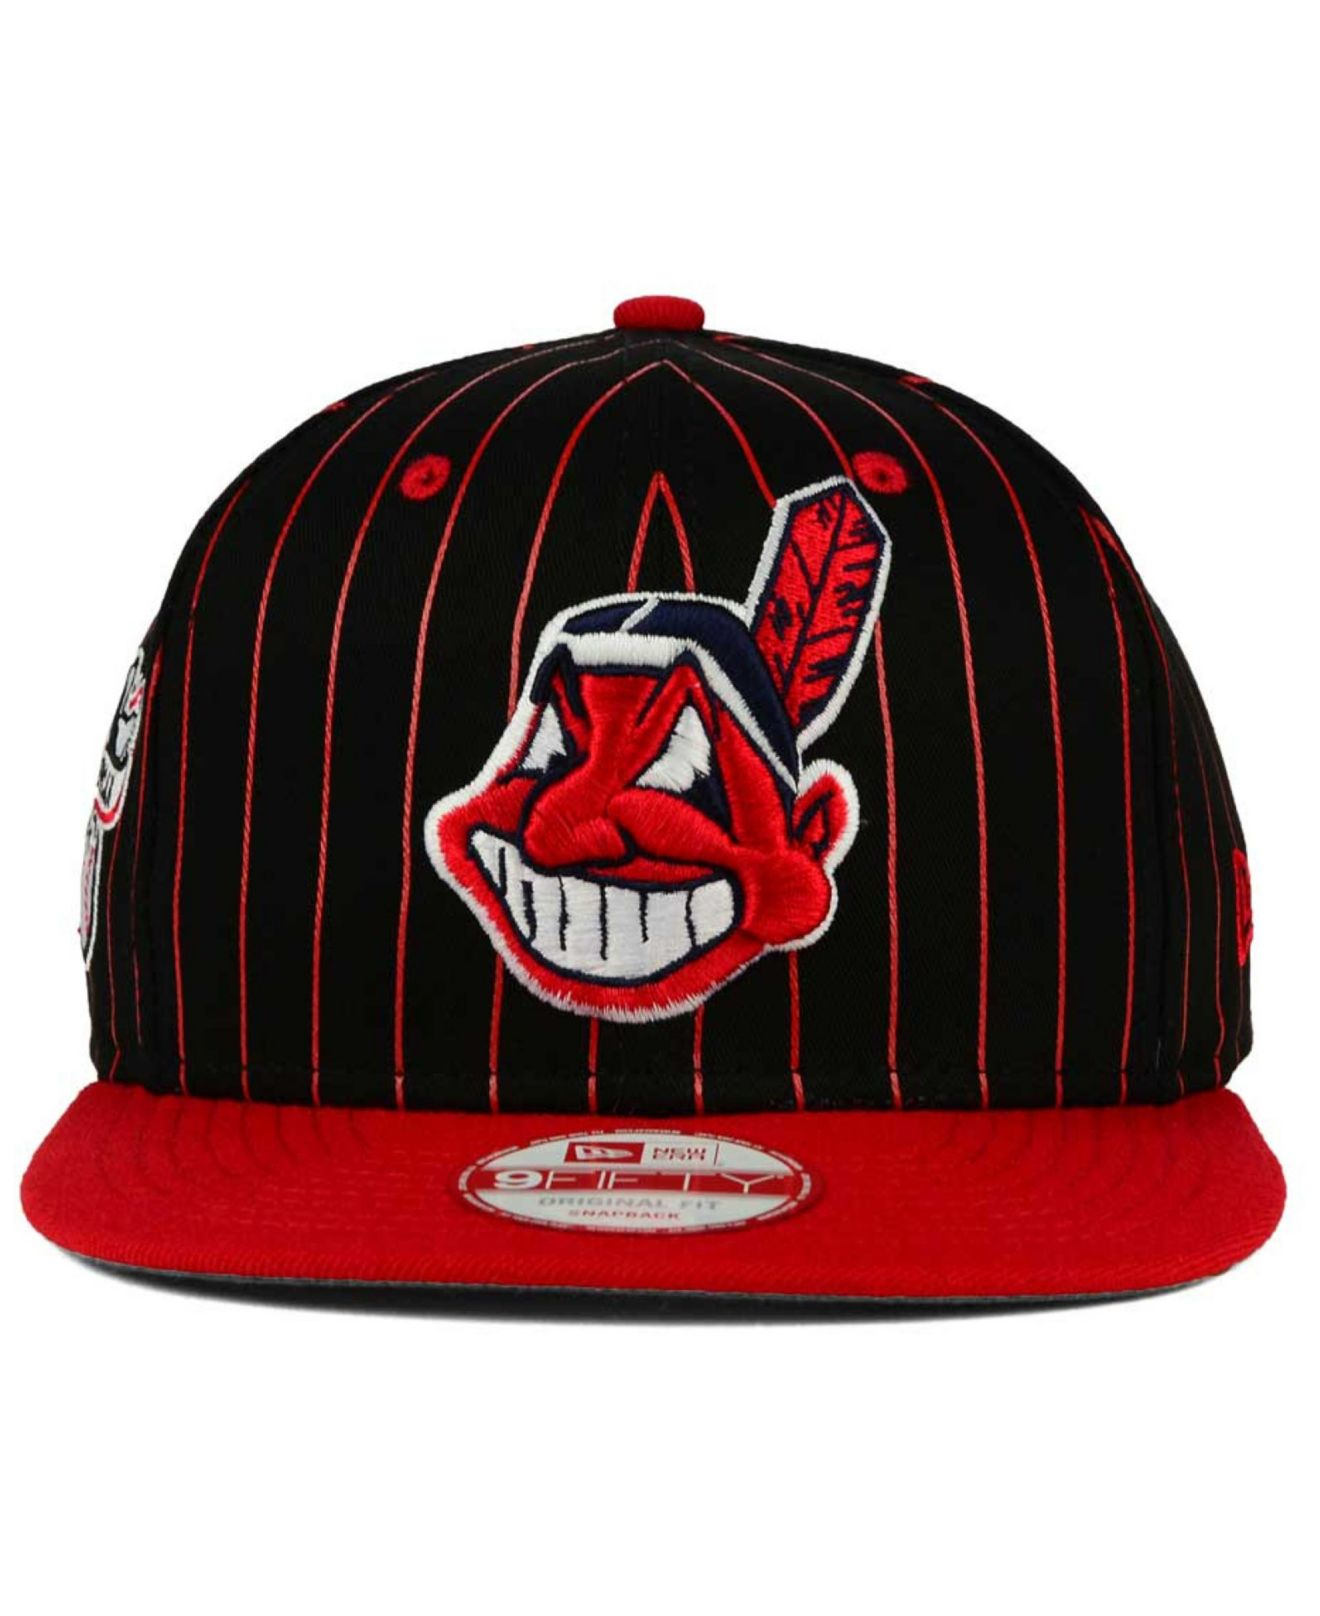 KTZ Cotton Cleveland Indians Vintage Pinstripe 9fifty Snapback Cap in